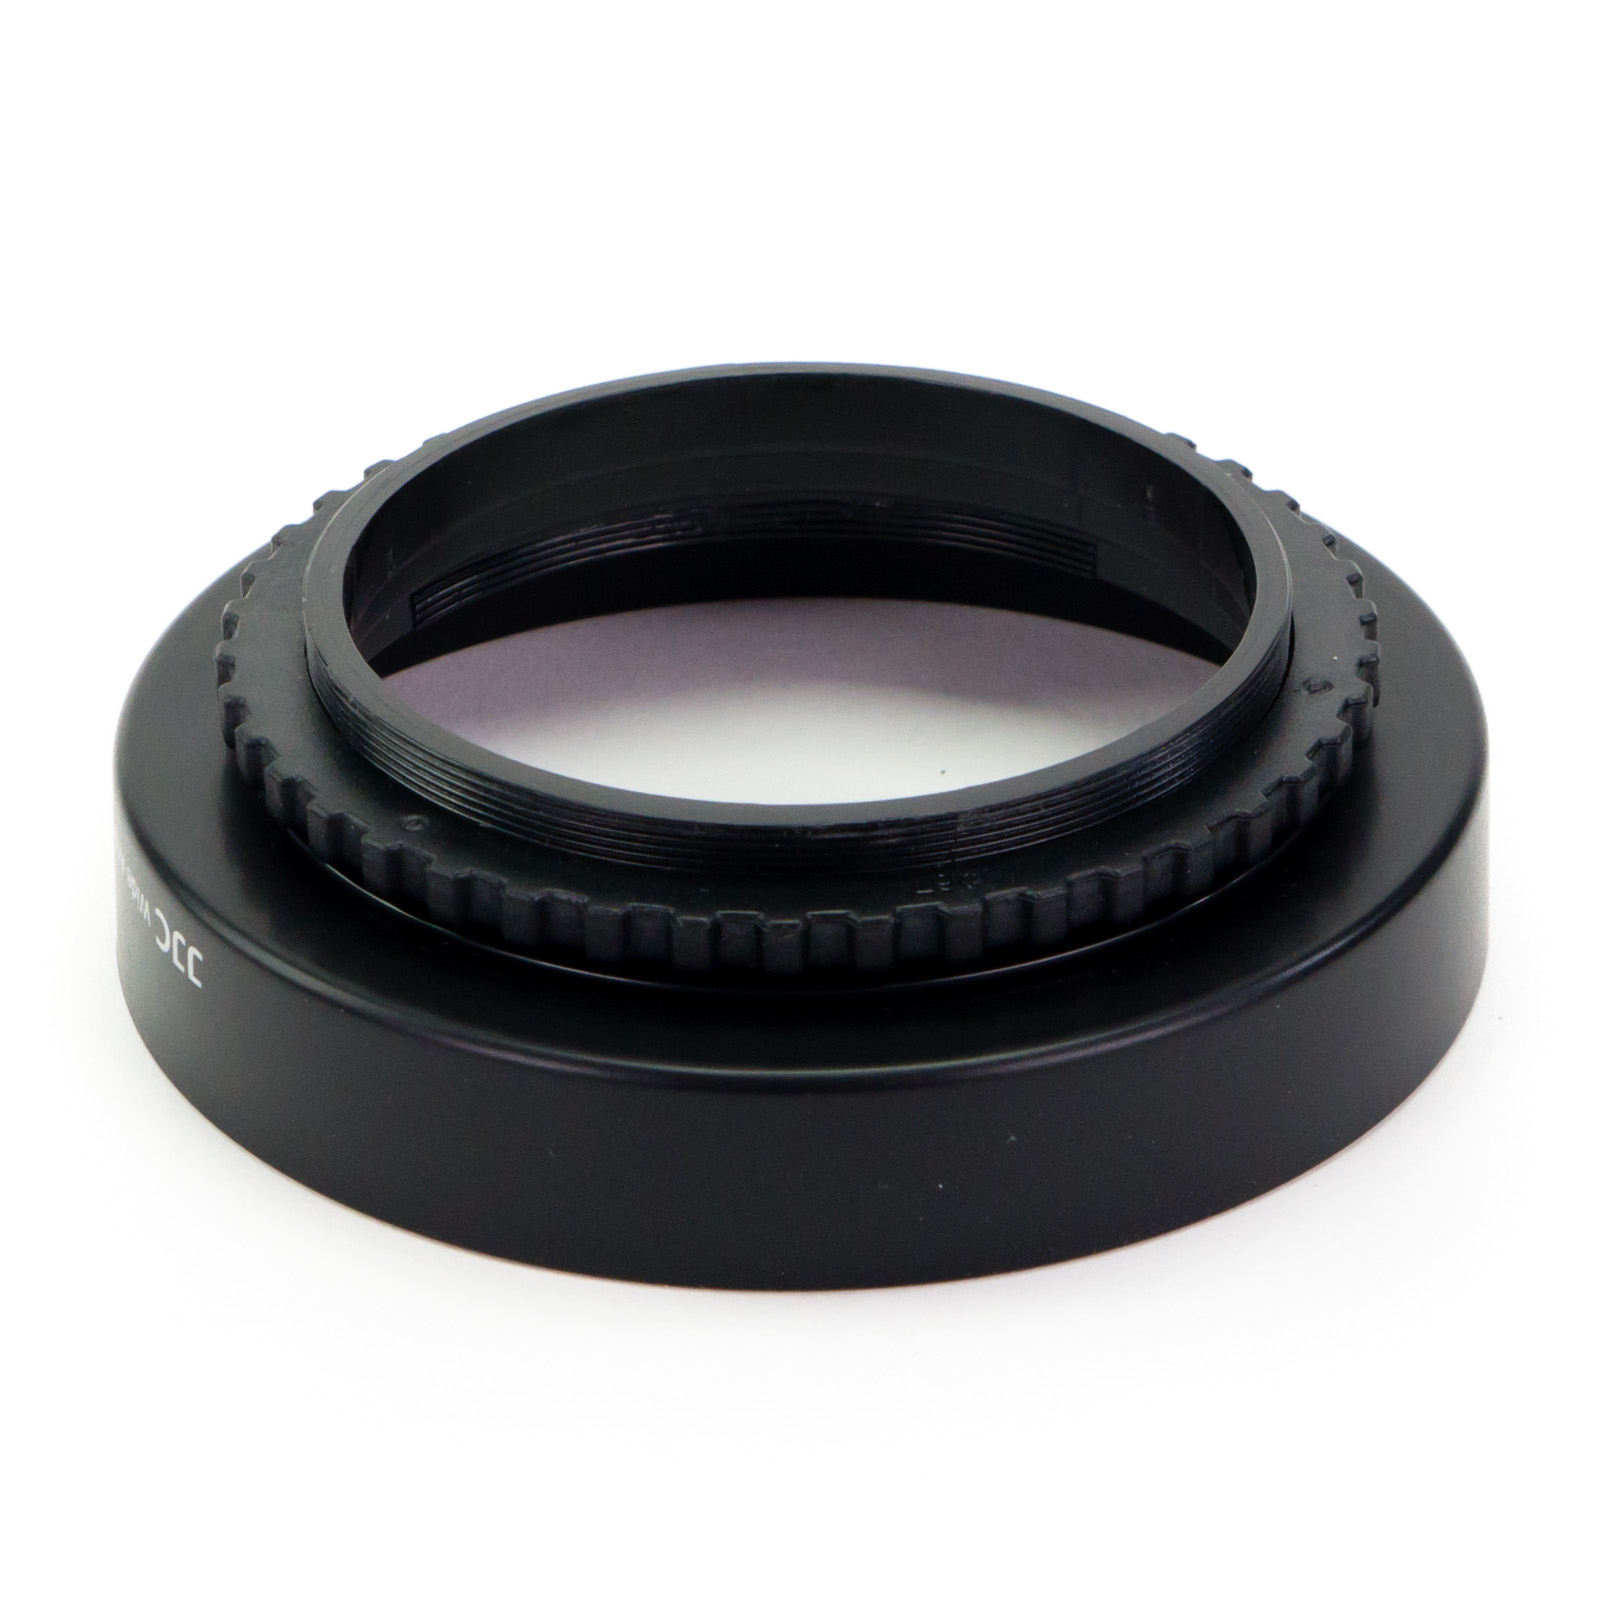 JJC Universal Lens Hood for Wide Angle Lens with